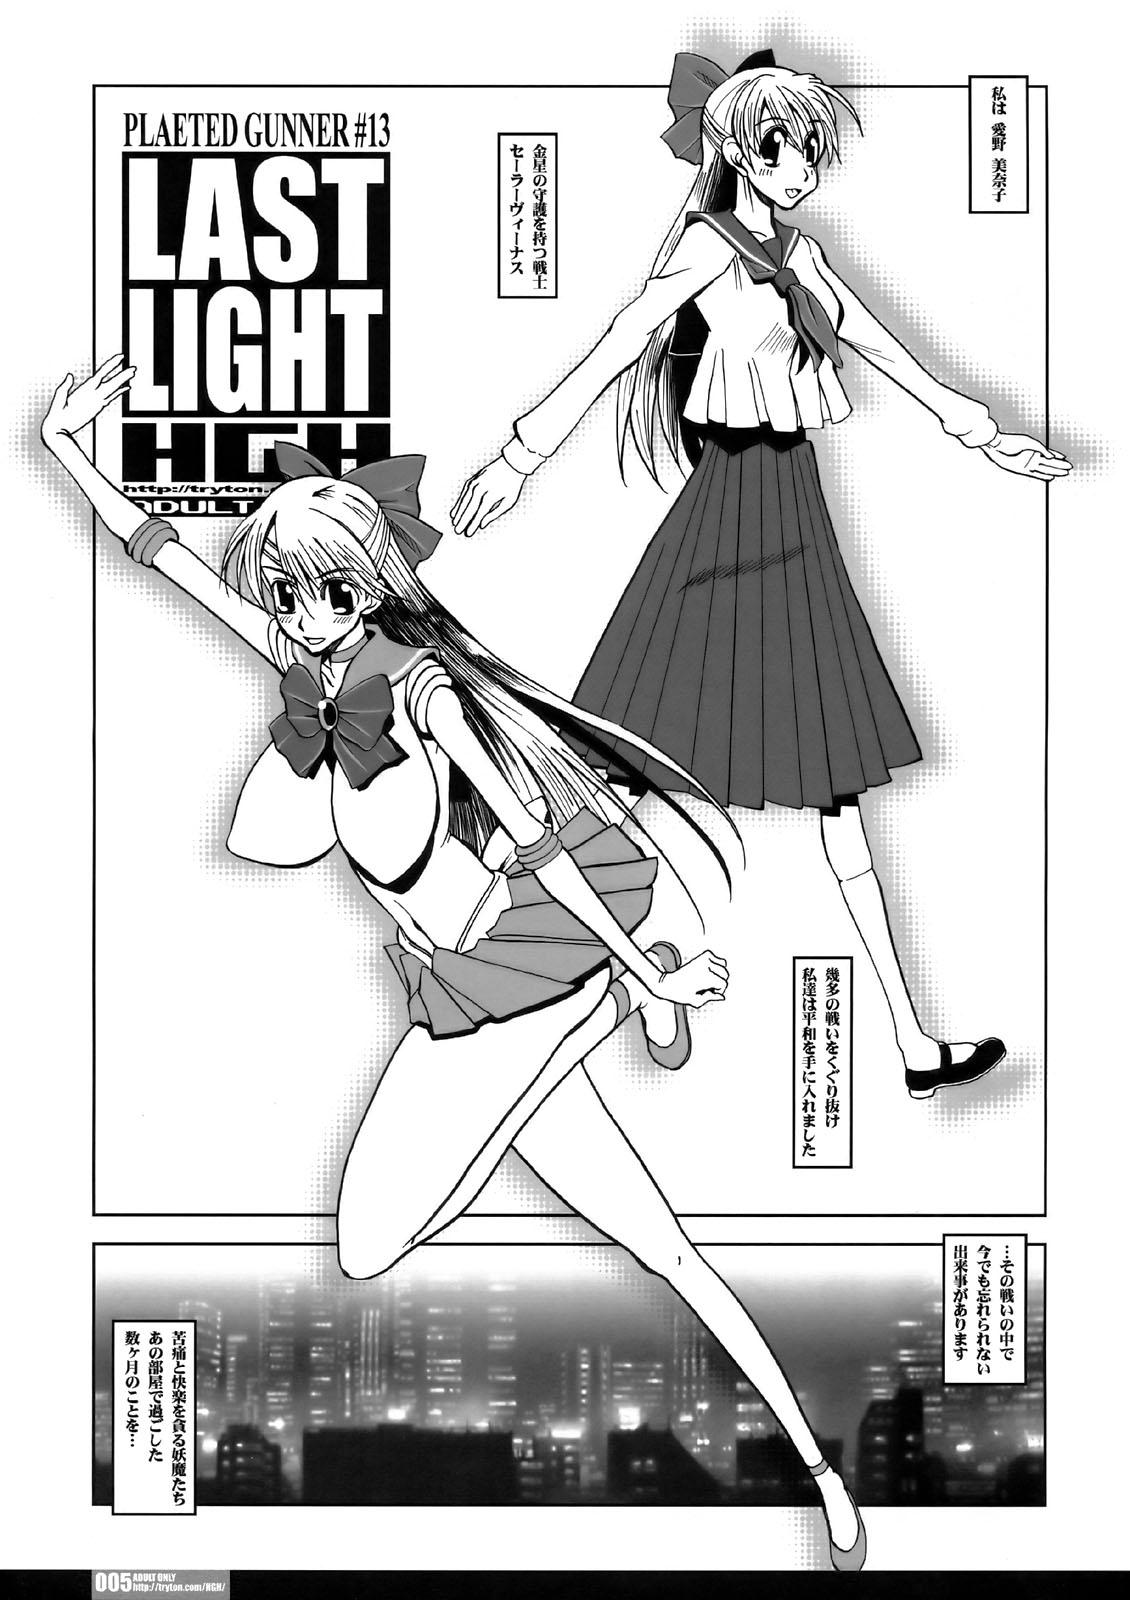 Desperate HGH - Last Light - Sailor moon Orgasmus - Page 5